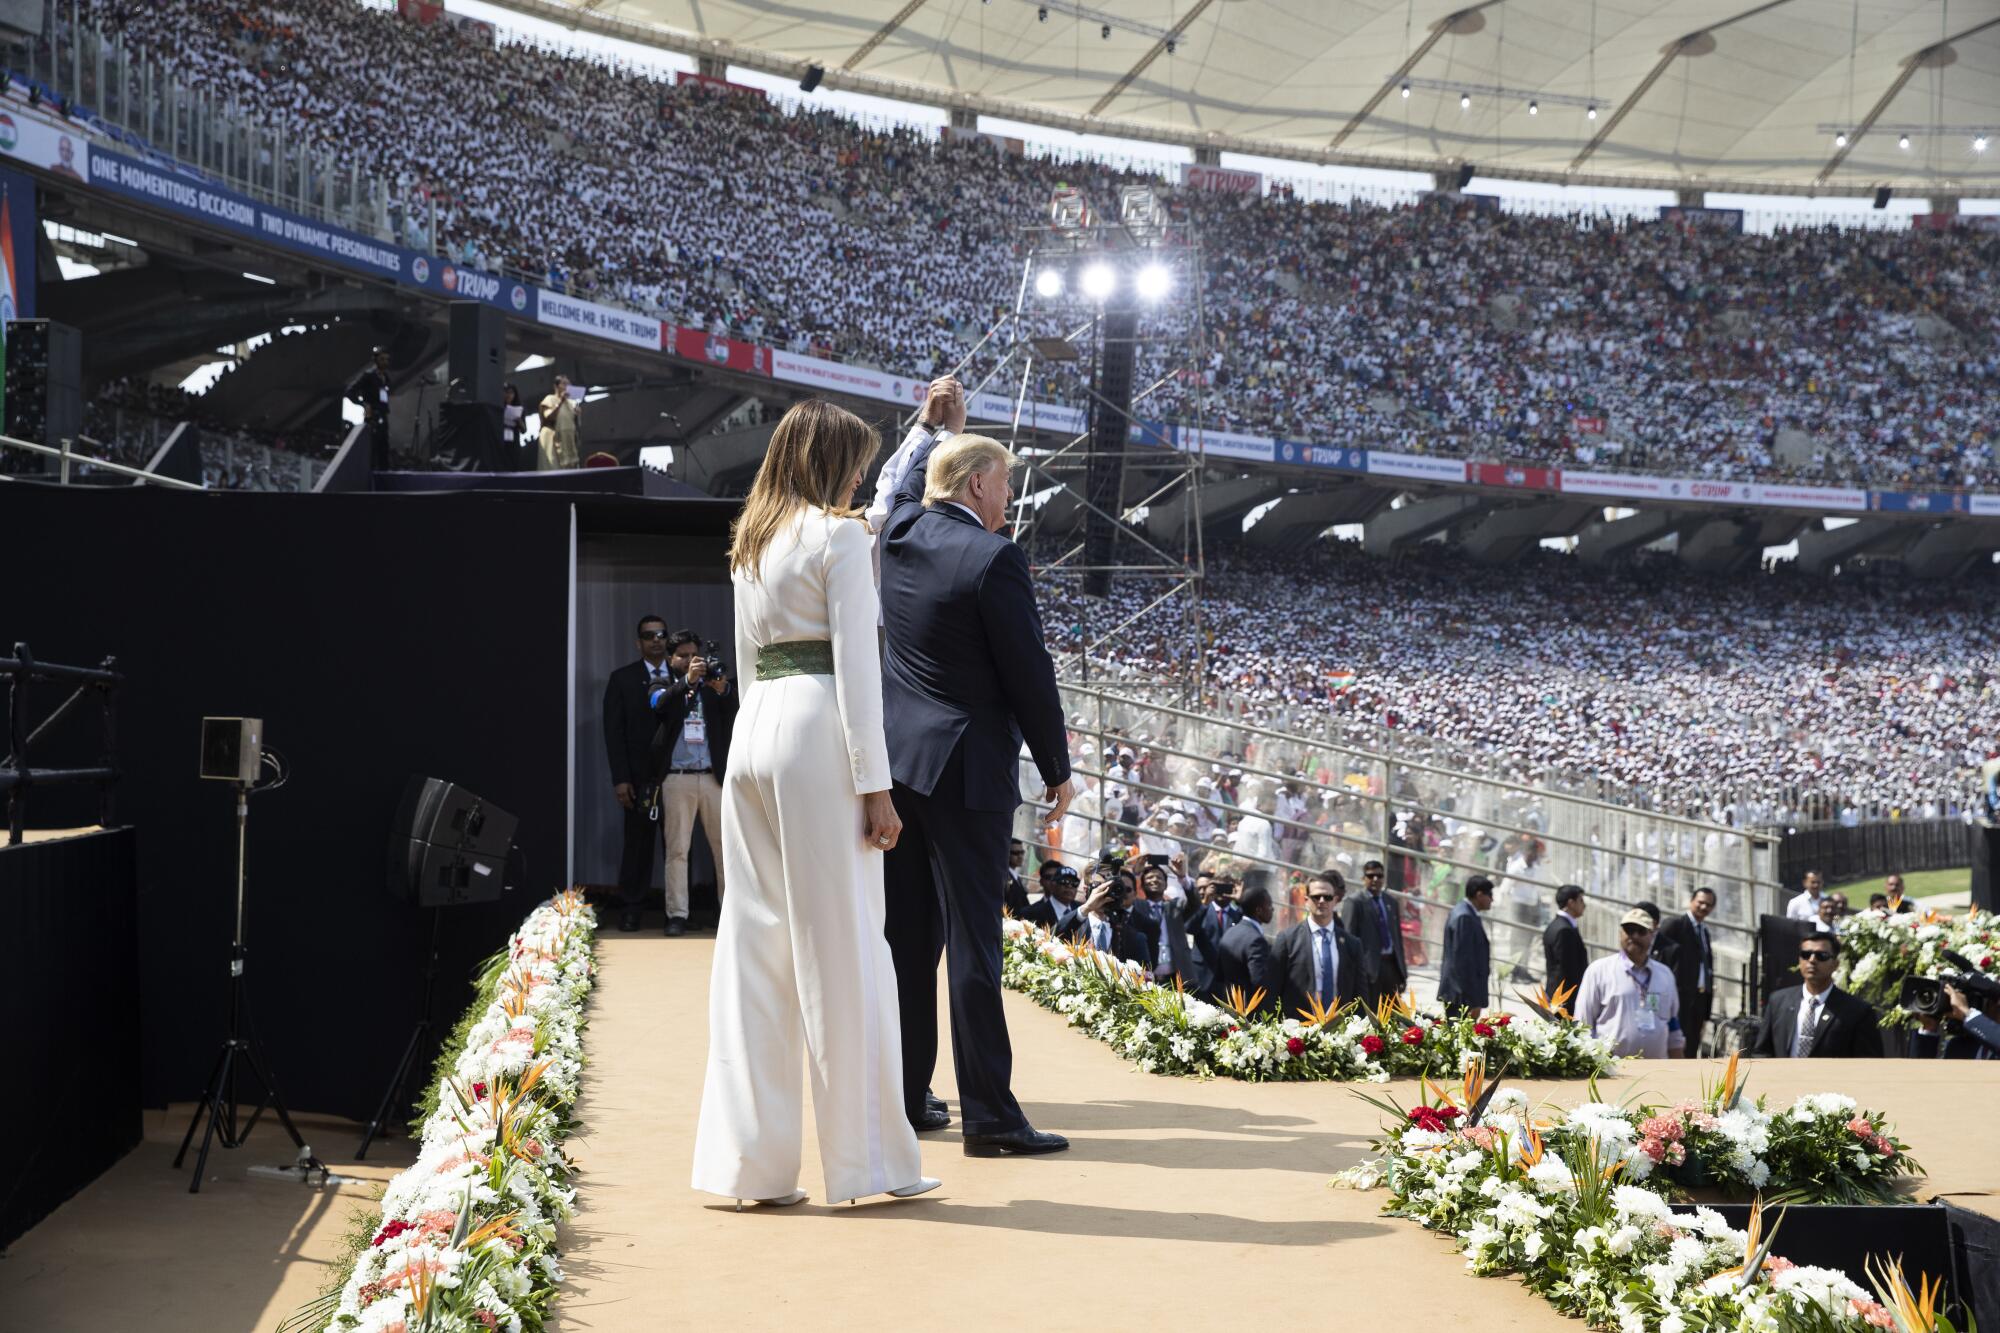 President Trump at stadium event during state visit to India